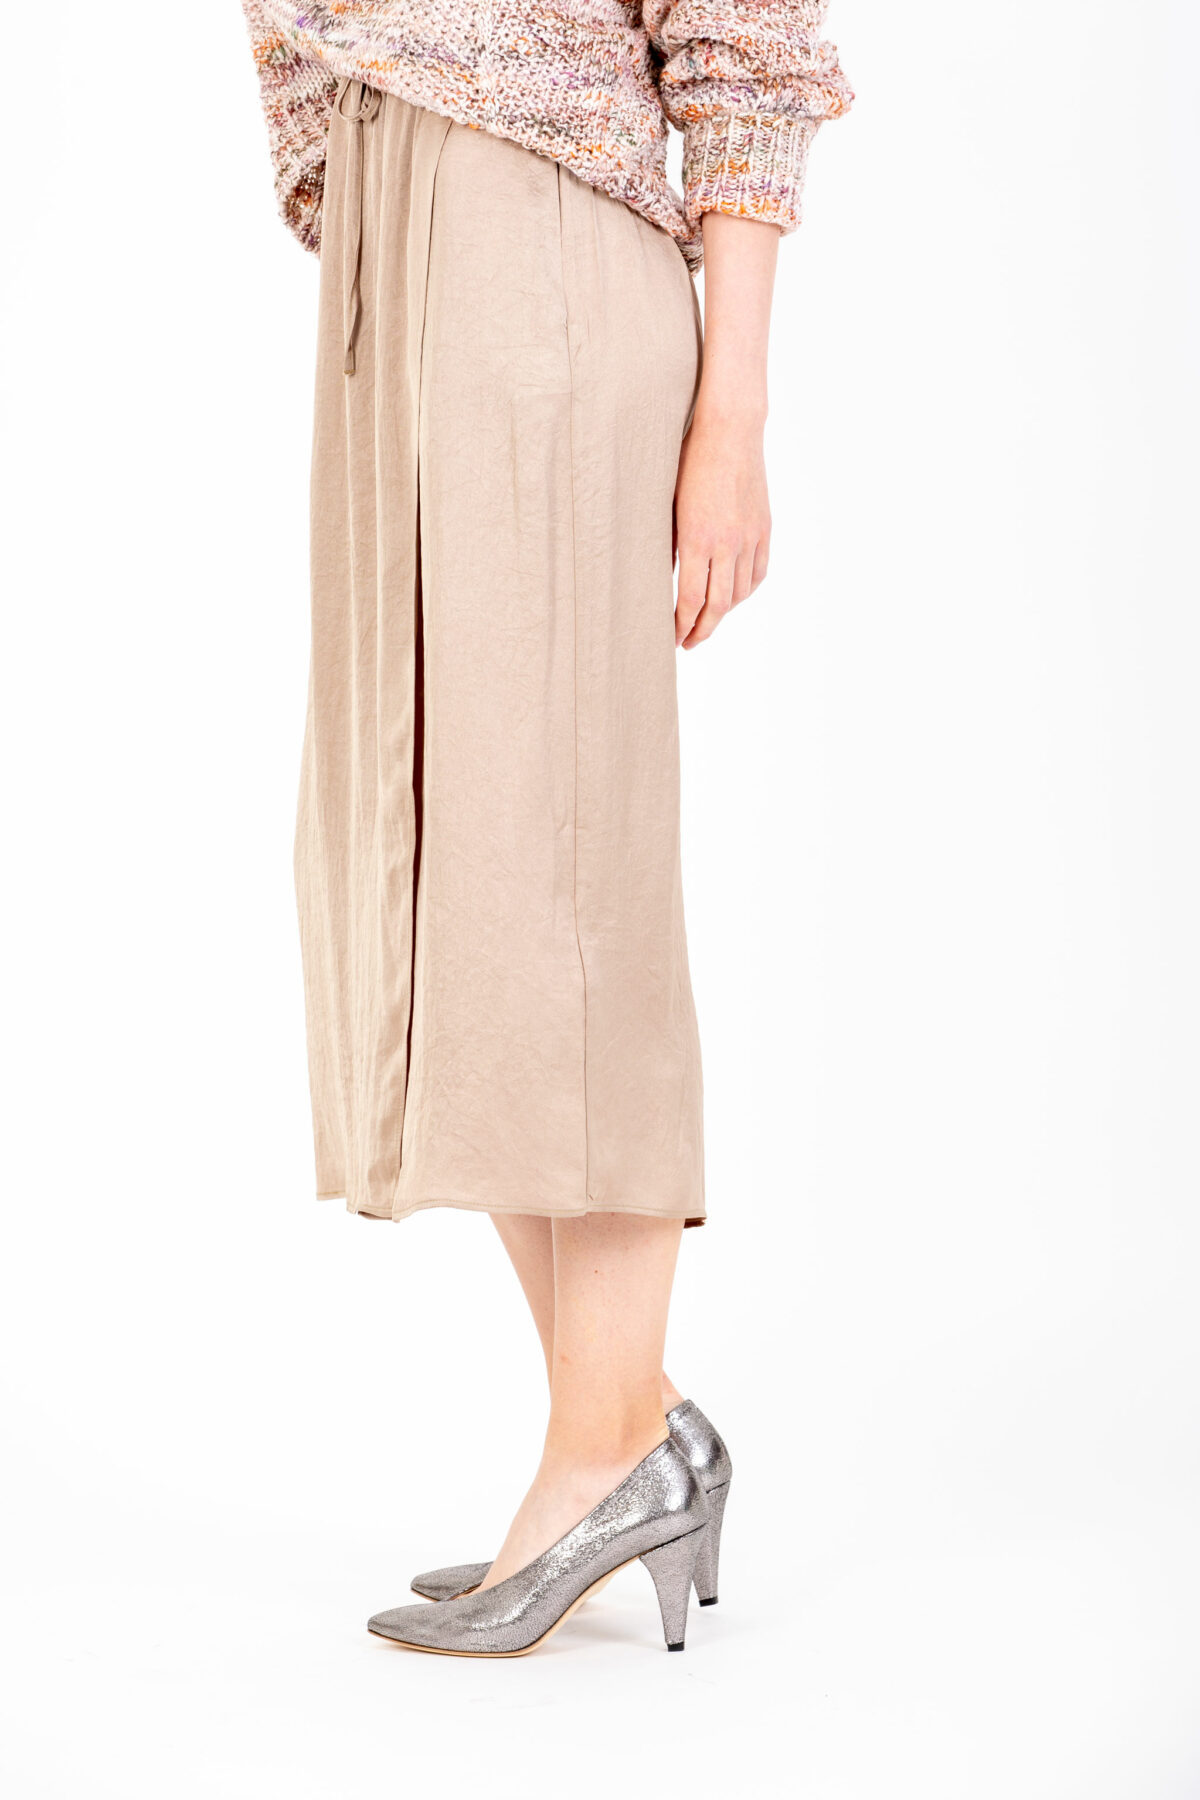 widland-taupe-midi-elasticated-wrap-skirt-satin-long-american-vintage-matchboxathens